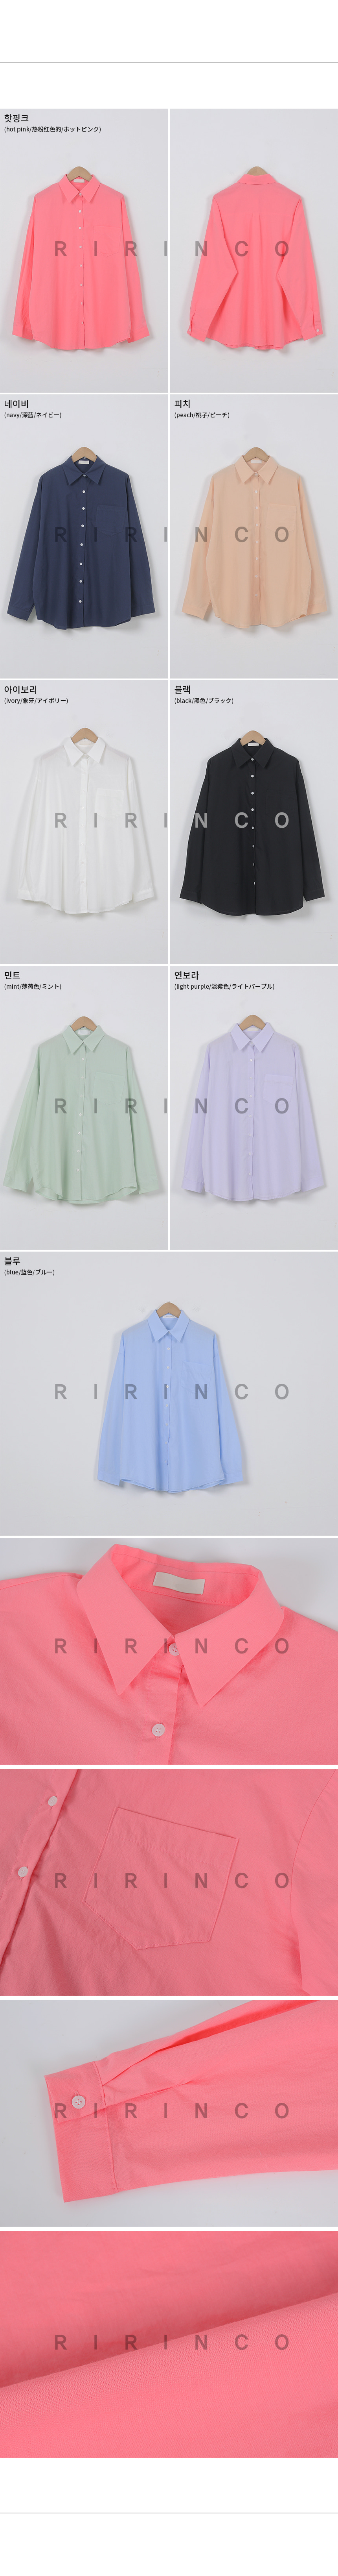 RIRINCO オーバーサイズカラーネックシャツ